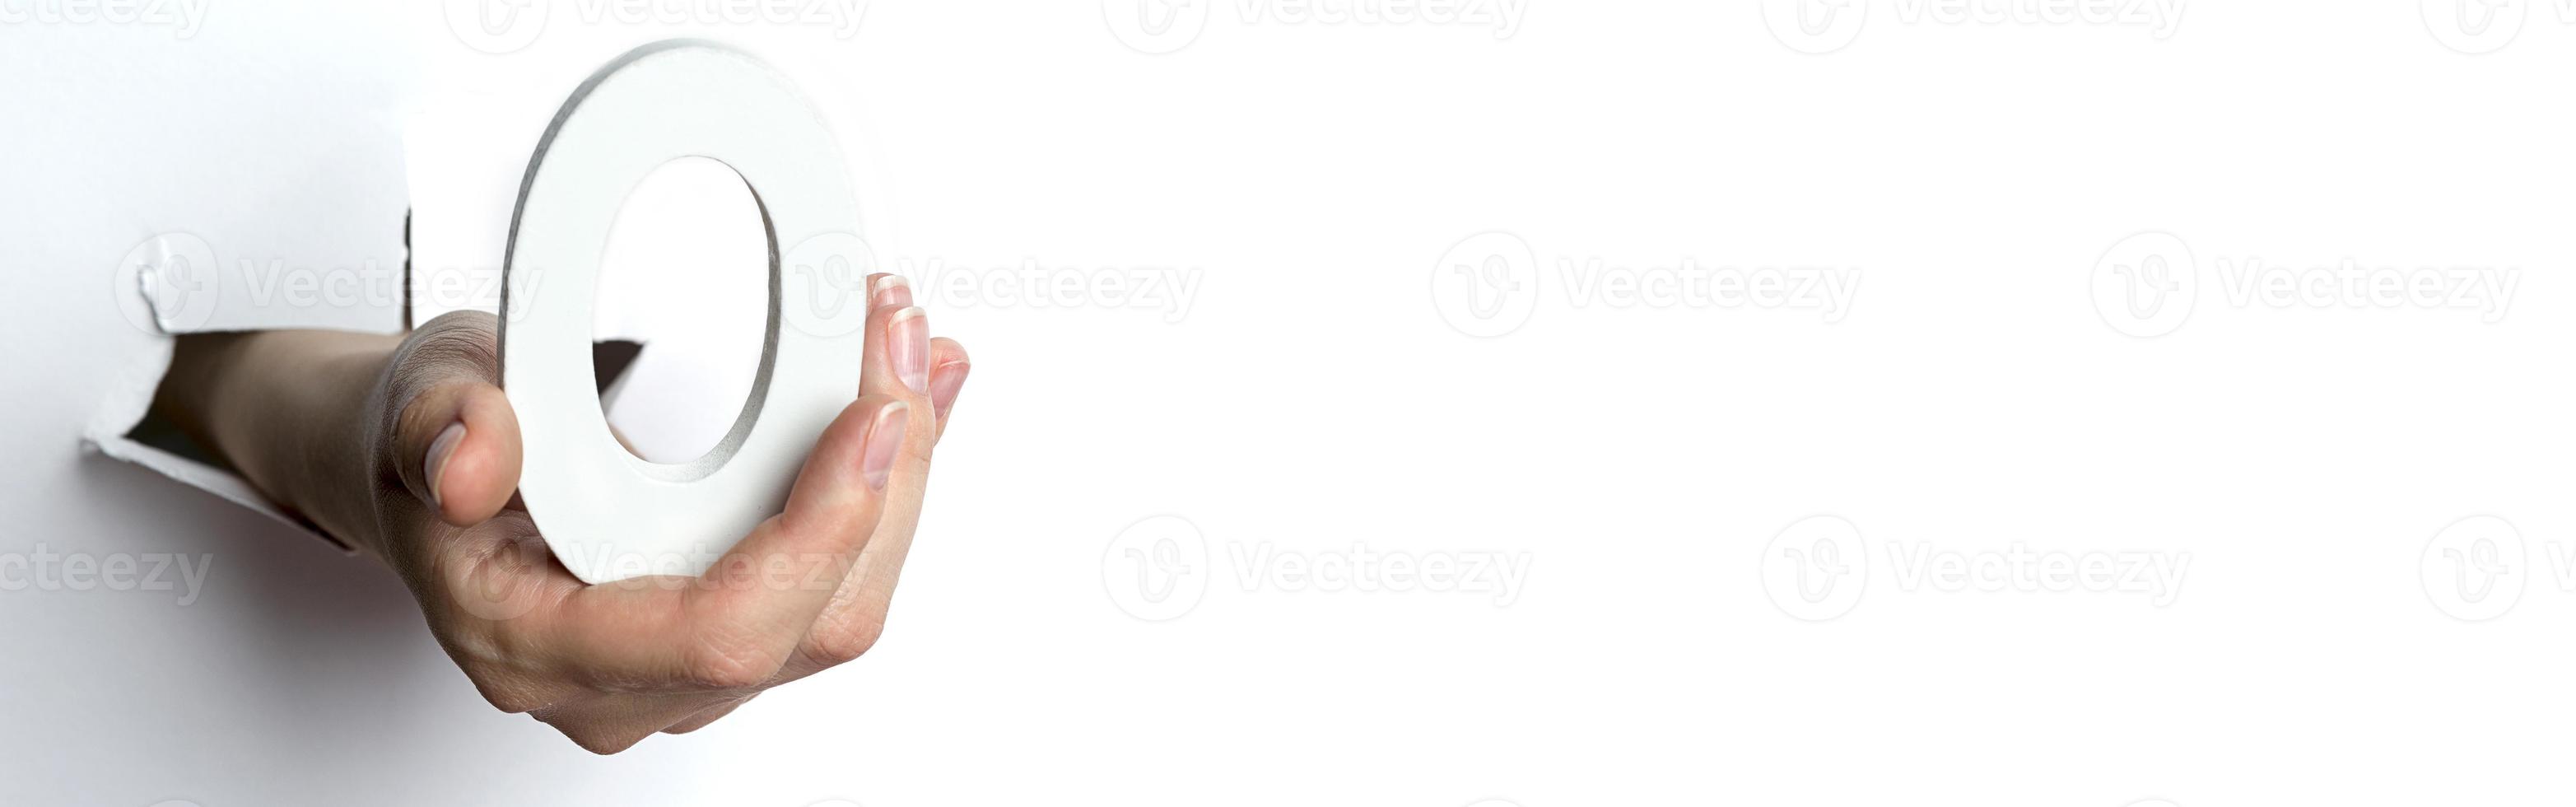 kvinnlig hand som håller ett nummer noll en vit bakgrund. kopieringsutrymme. foto